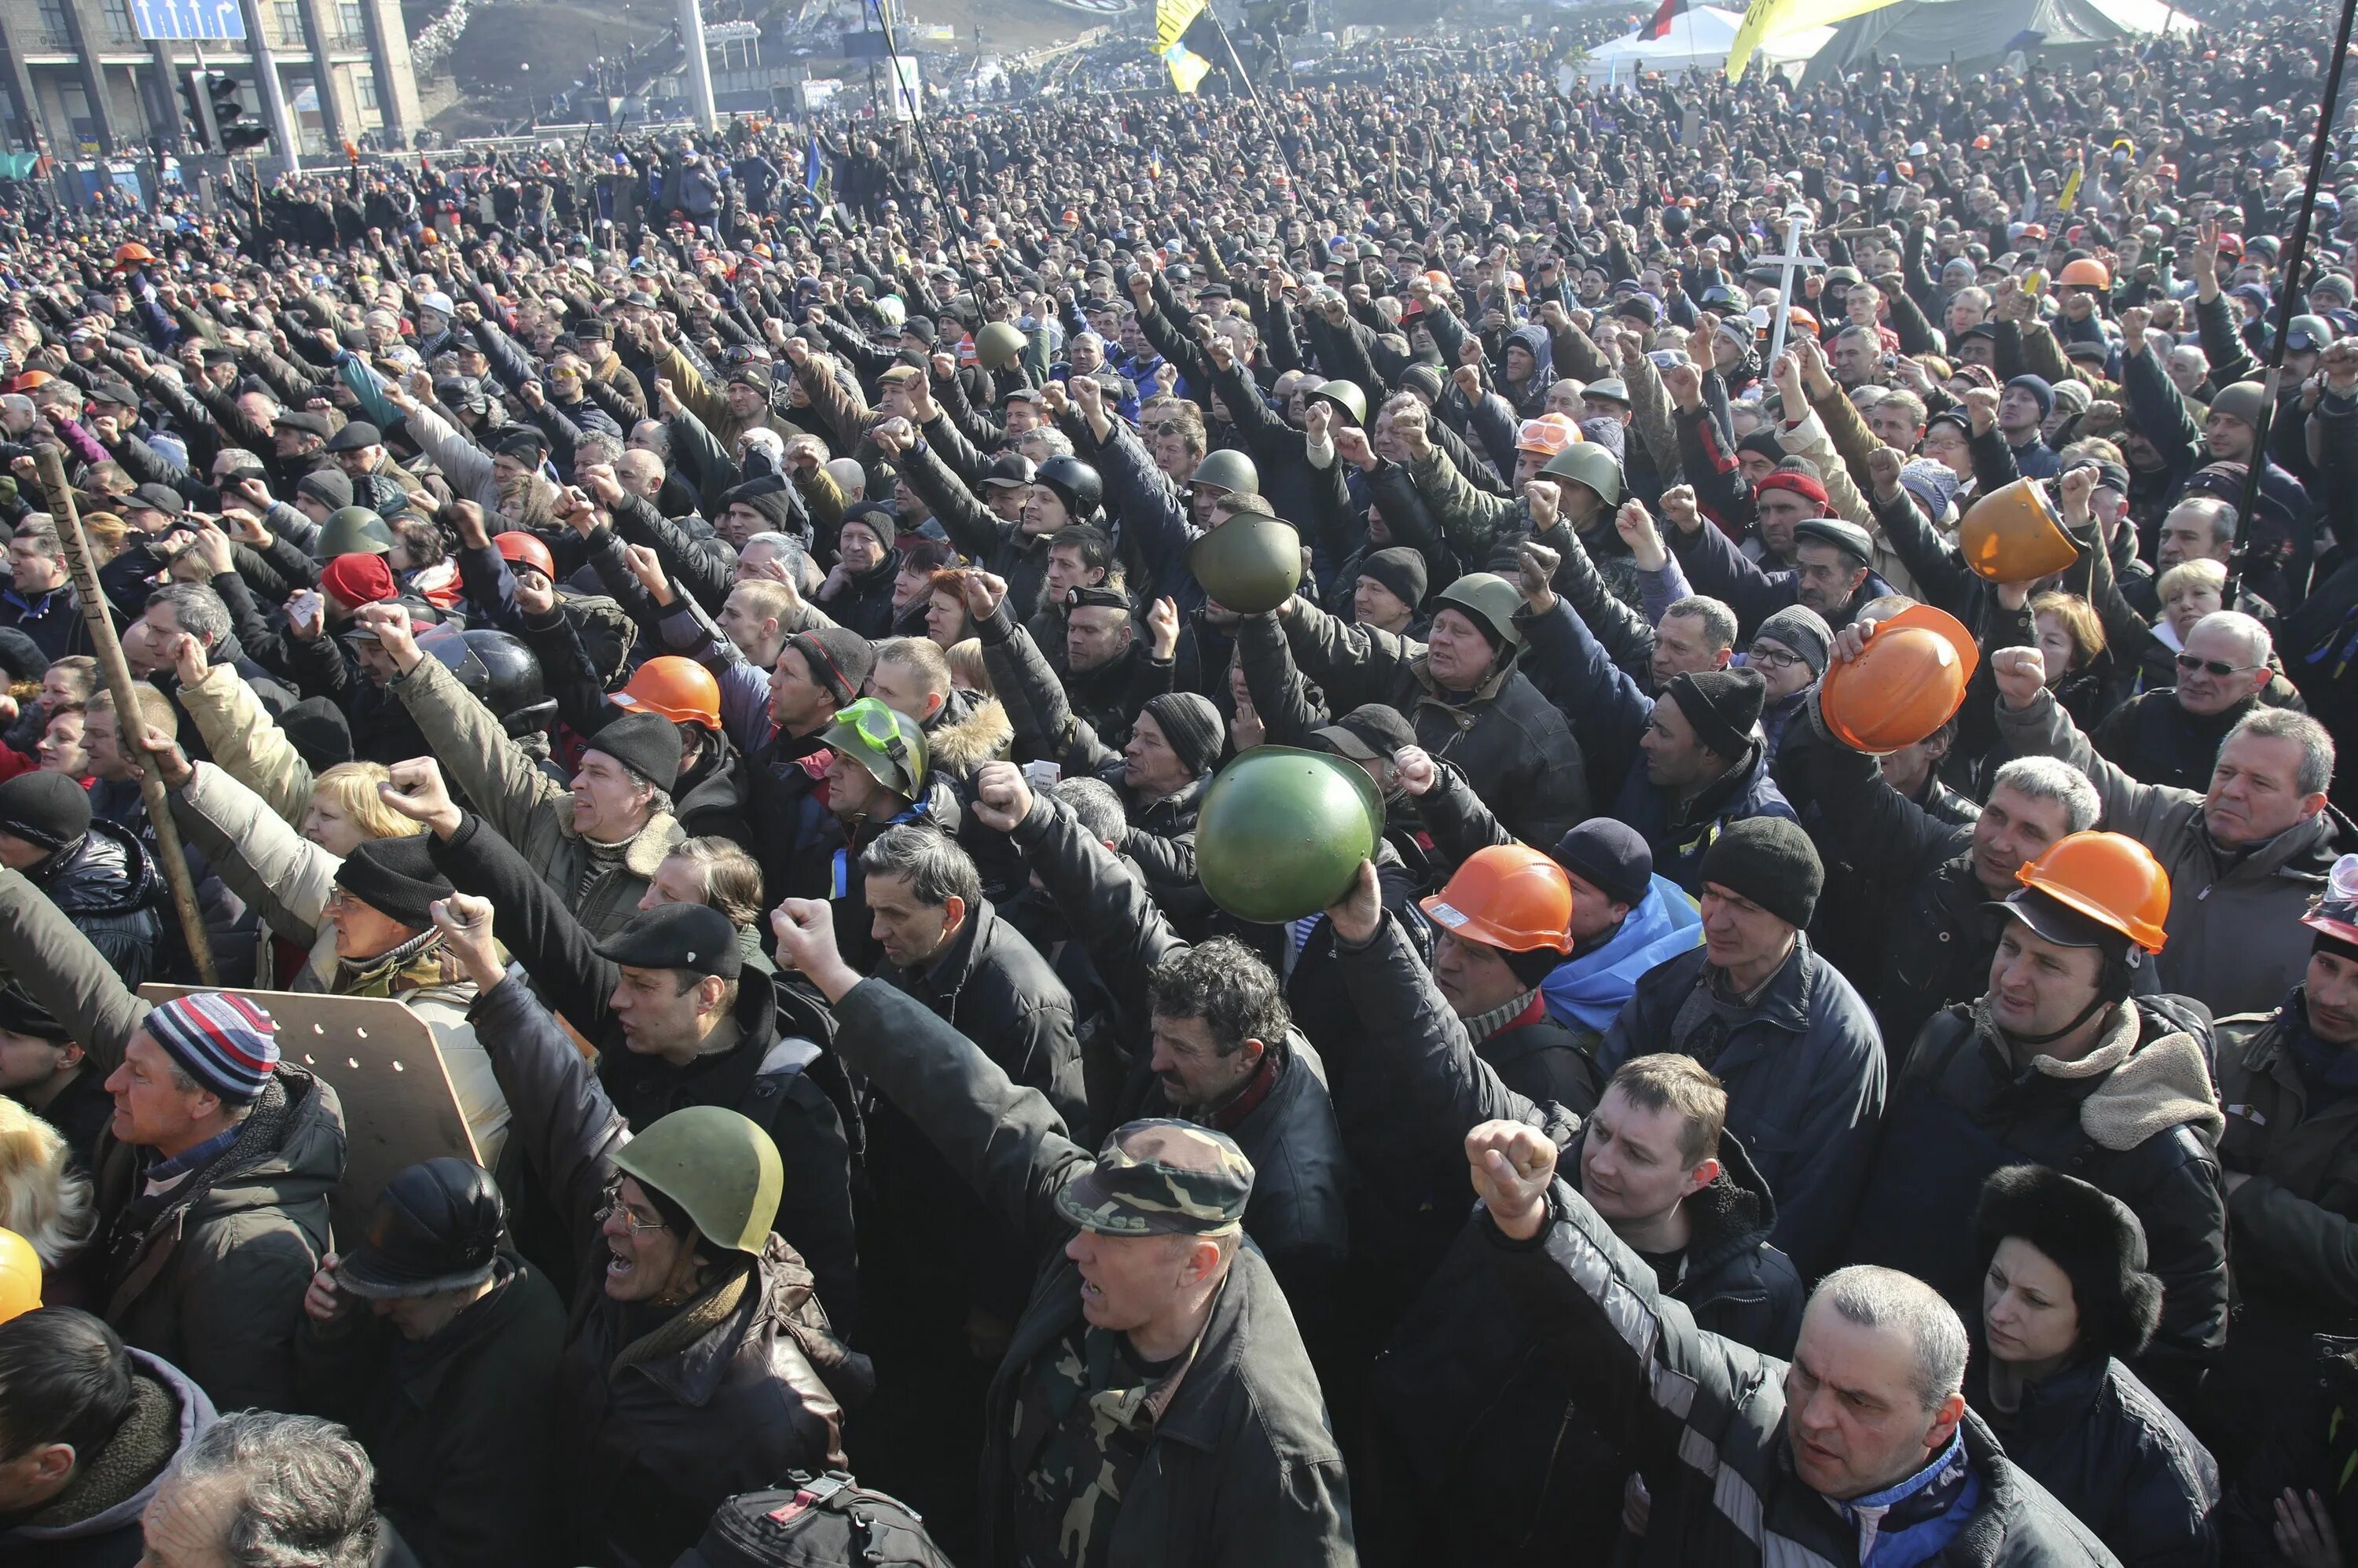 11 майдан. Майдан кастрюля на голове. Протест с кастрюлями (Евромайдан). Силуэт толпы на Майдане. Розы Майдана.